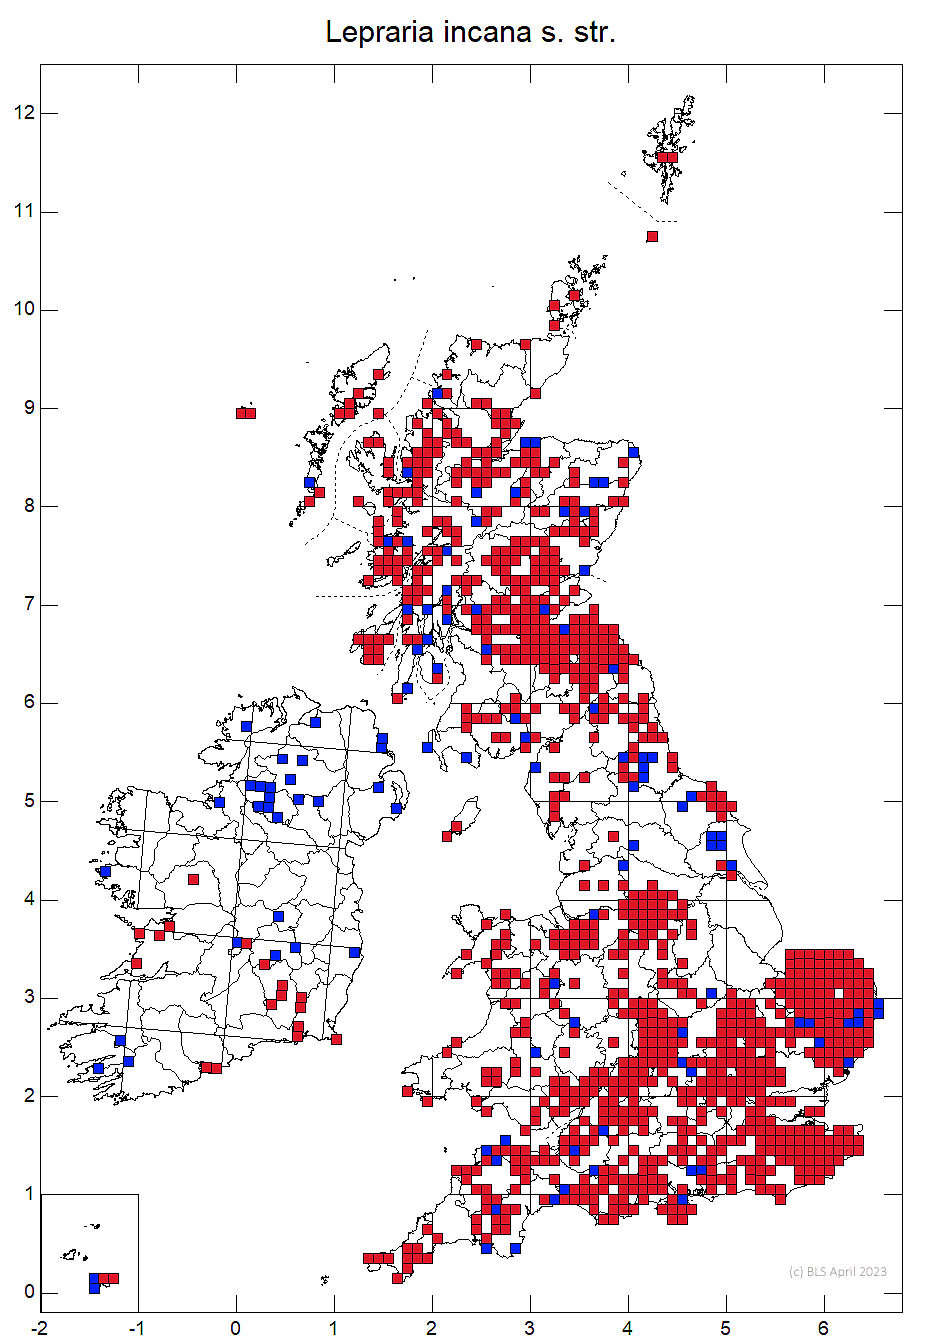 Lepraria incana s. str. 10km sq distribution map